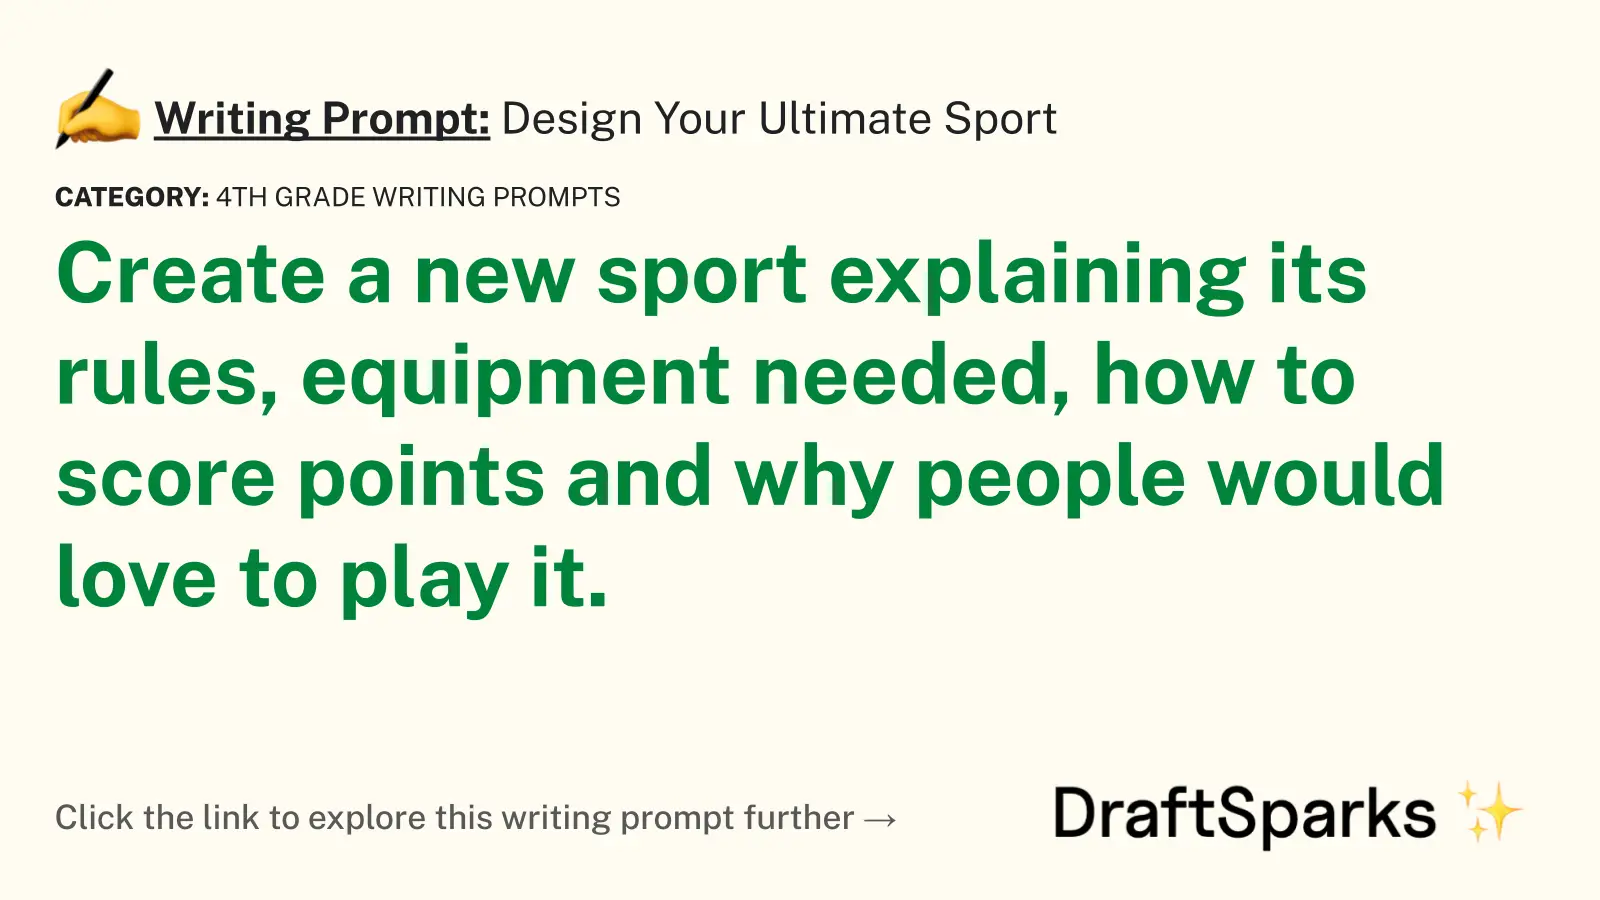 Design Your Ultimate Sport